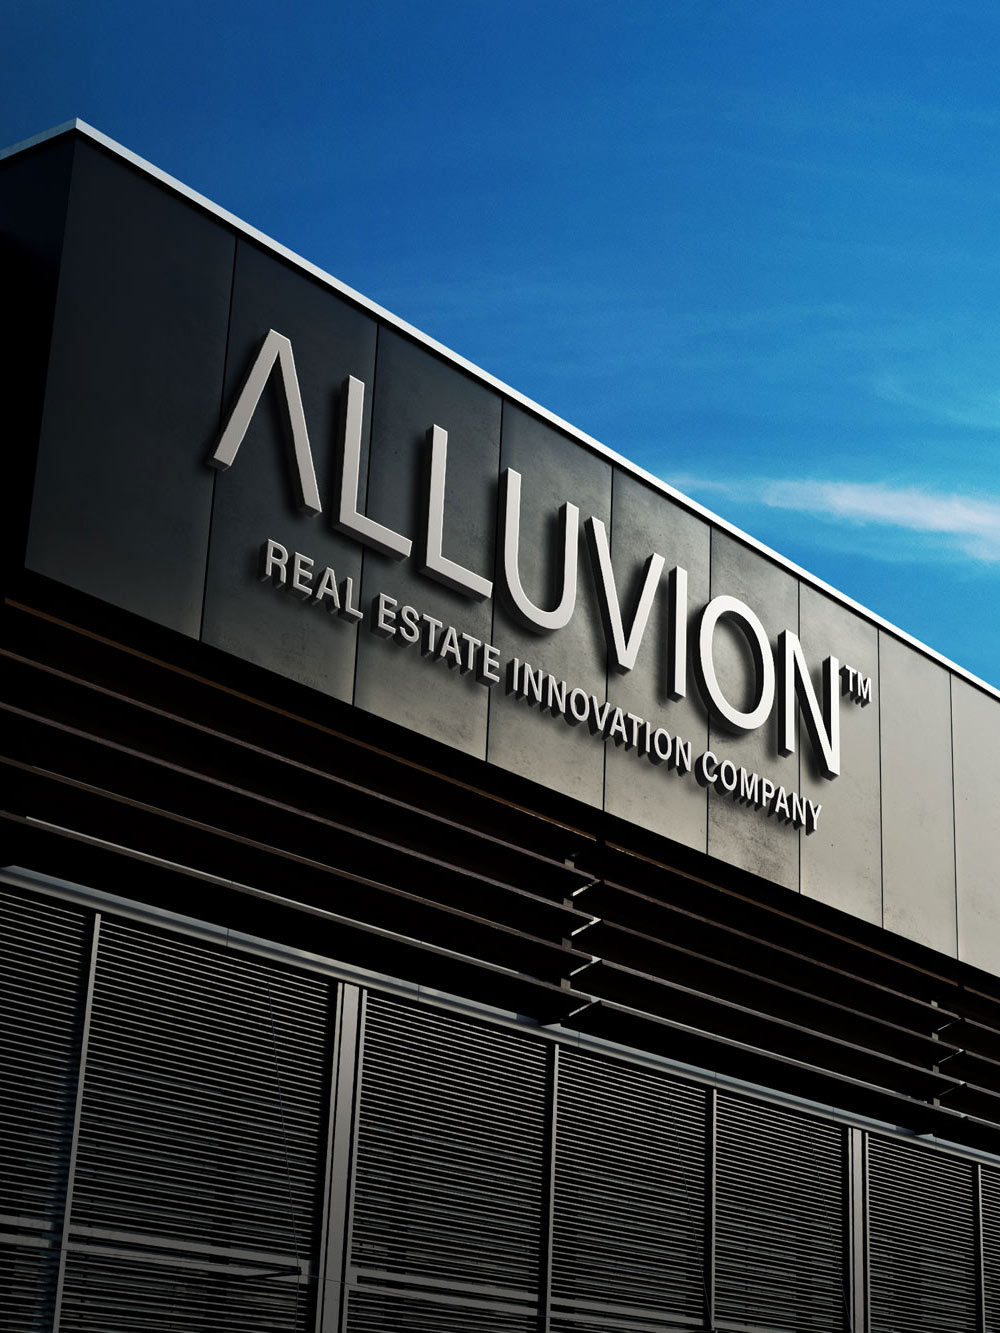 ALLUVION – Real Estate Innovation Company